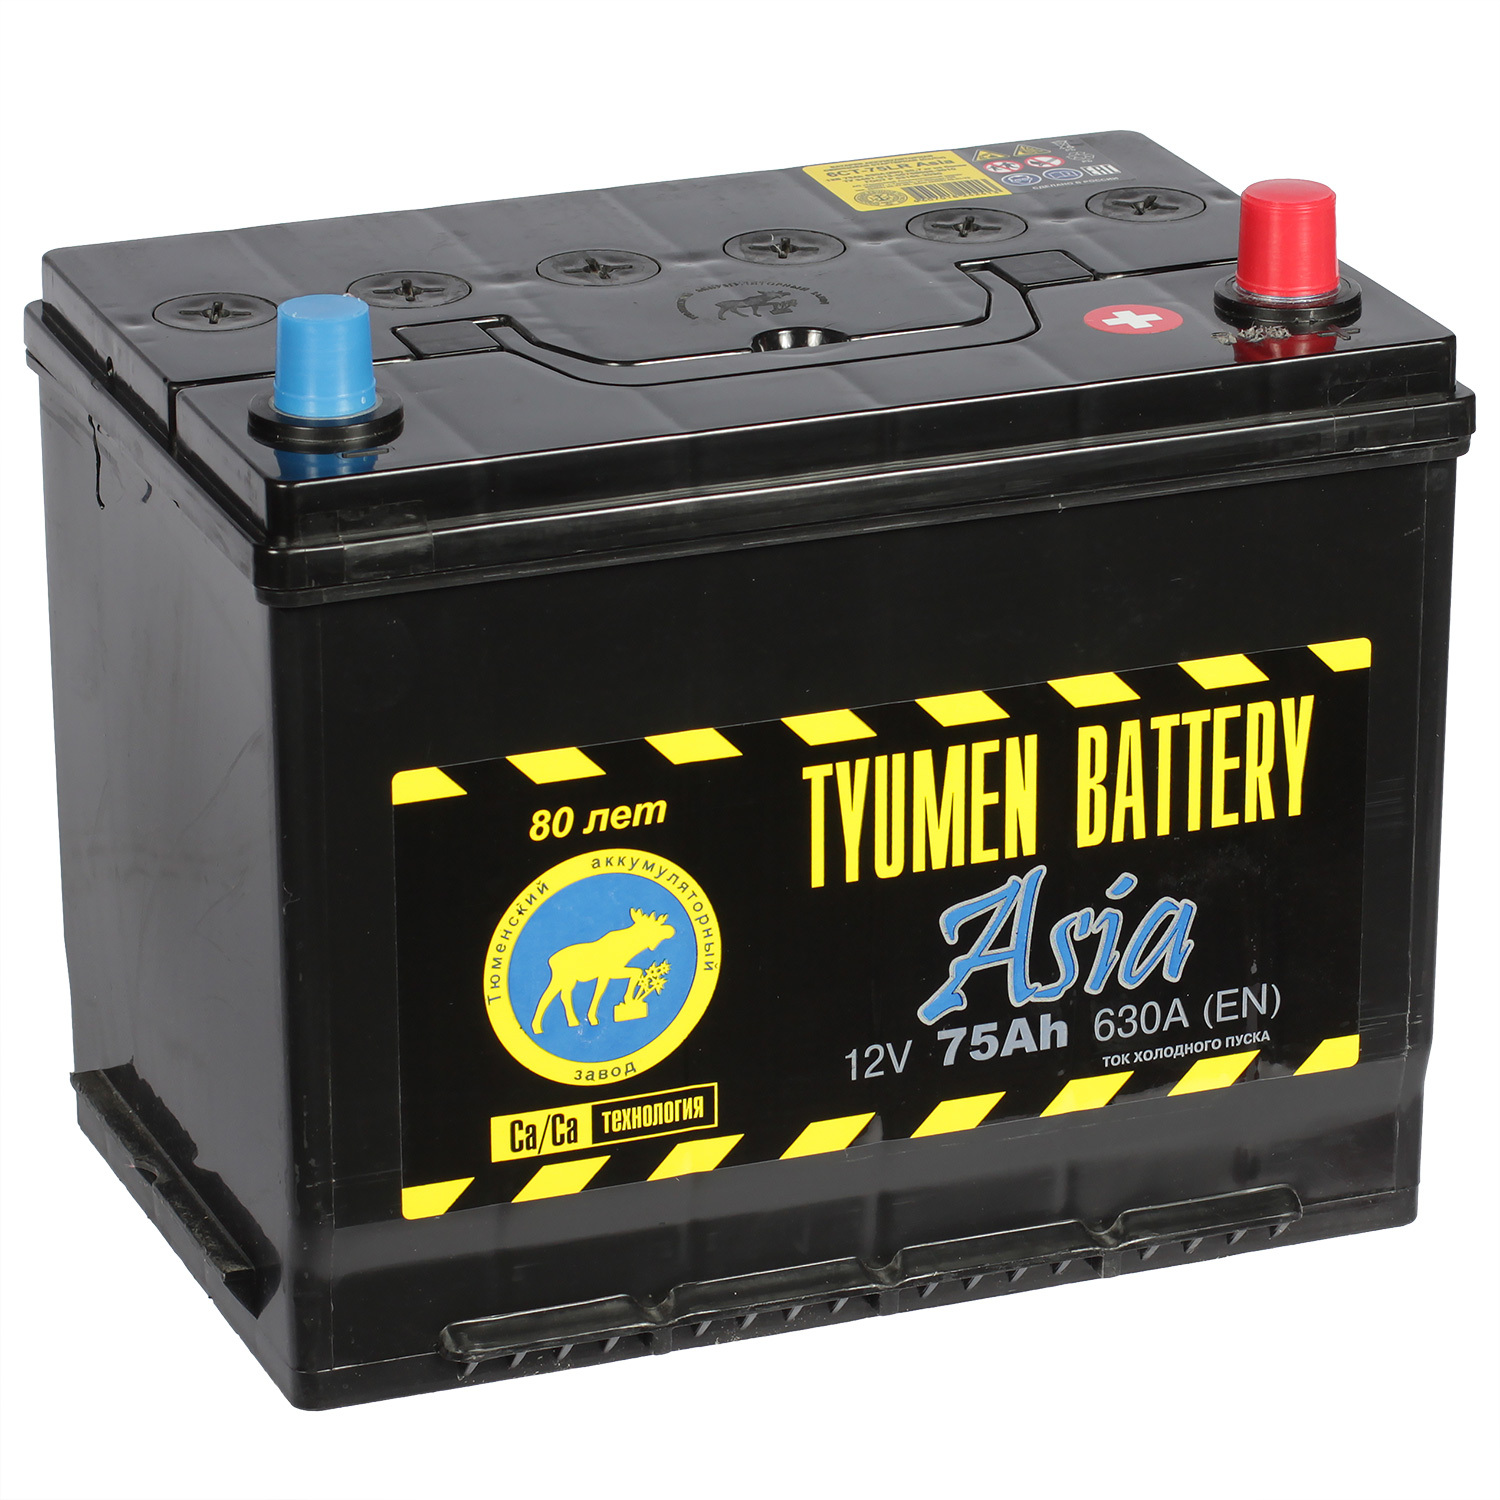 Tyumen Battery Автомобильный аккумулятор Tyumen Battery Asia 75 Ач обратная полярность D26L tyumen battery автомобильный аккумулятор tyumen battery premium 50 ач обратная полярность l1